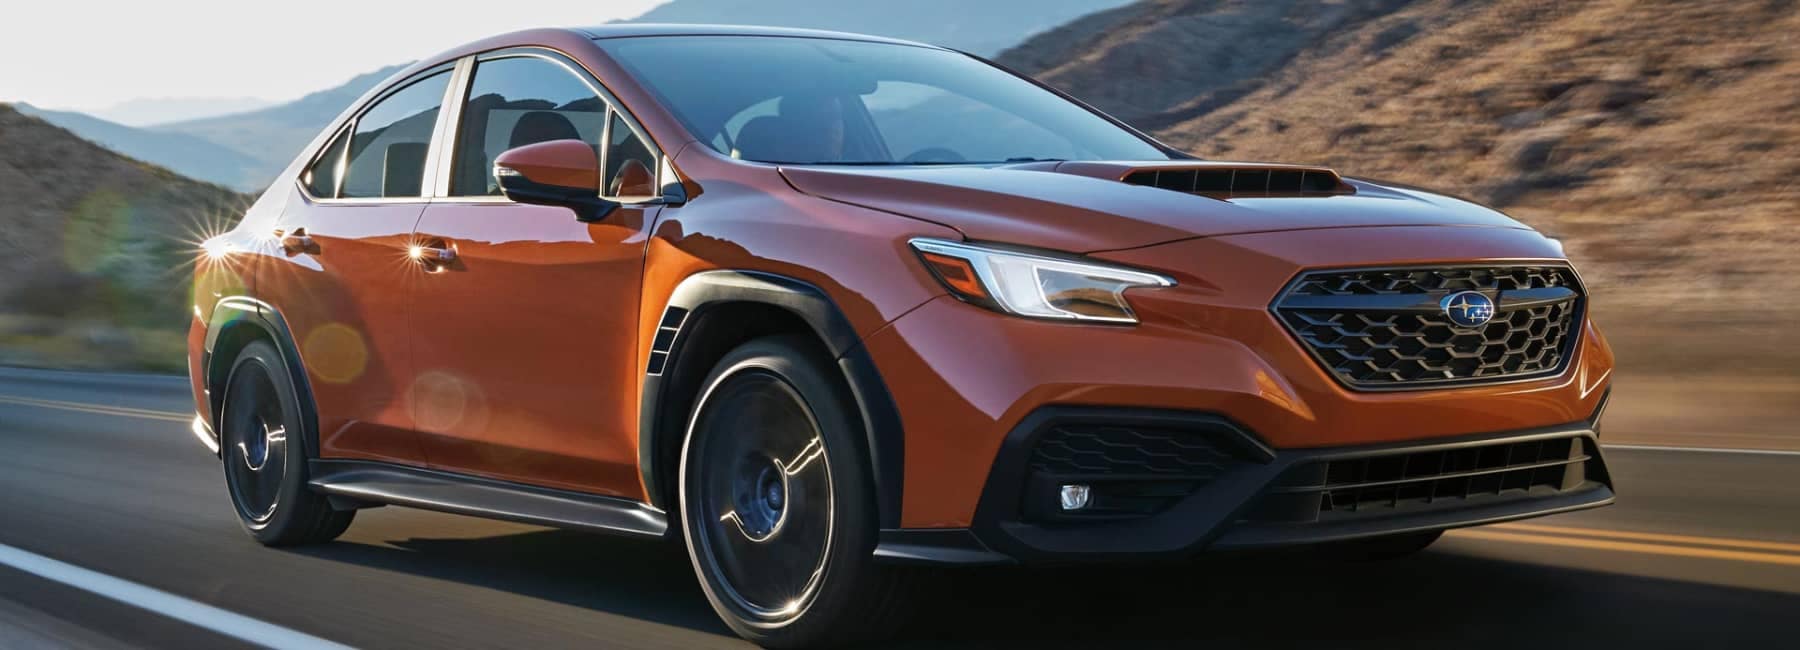 2022 Subaru WRX-closeup 3qview-driving down highway-orange